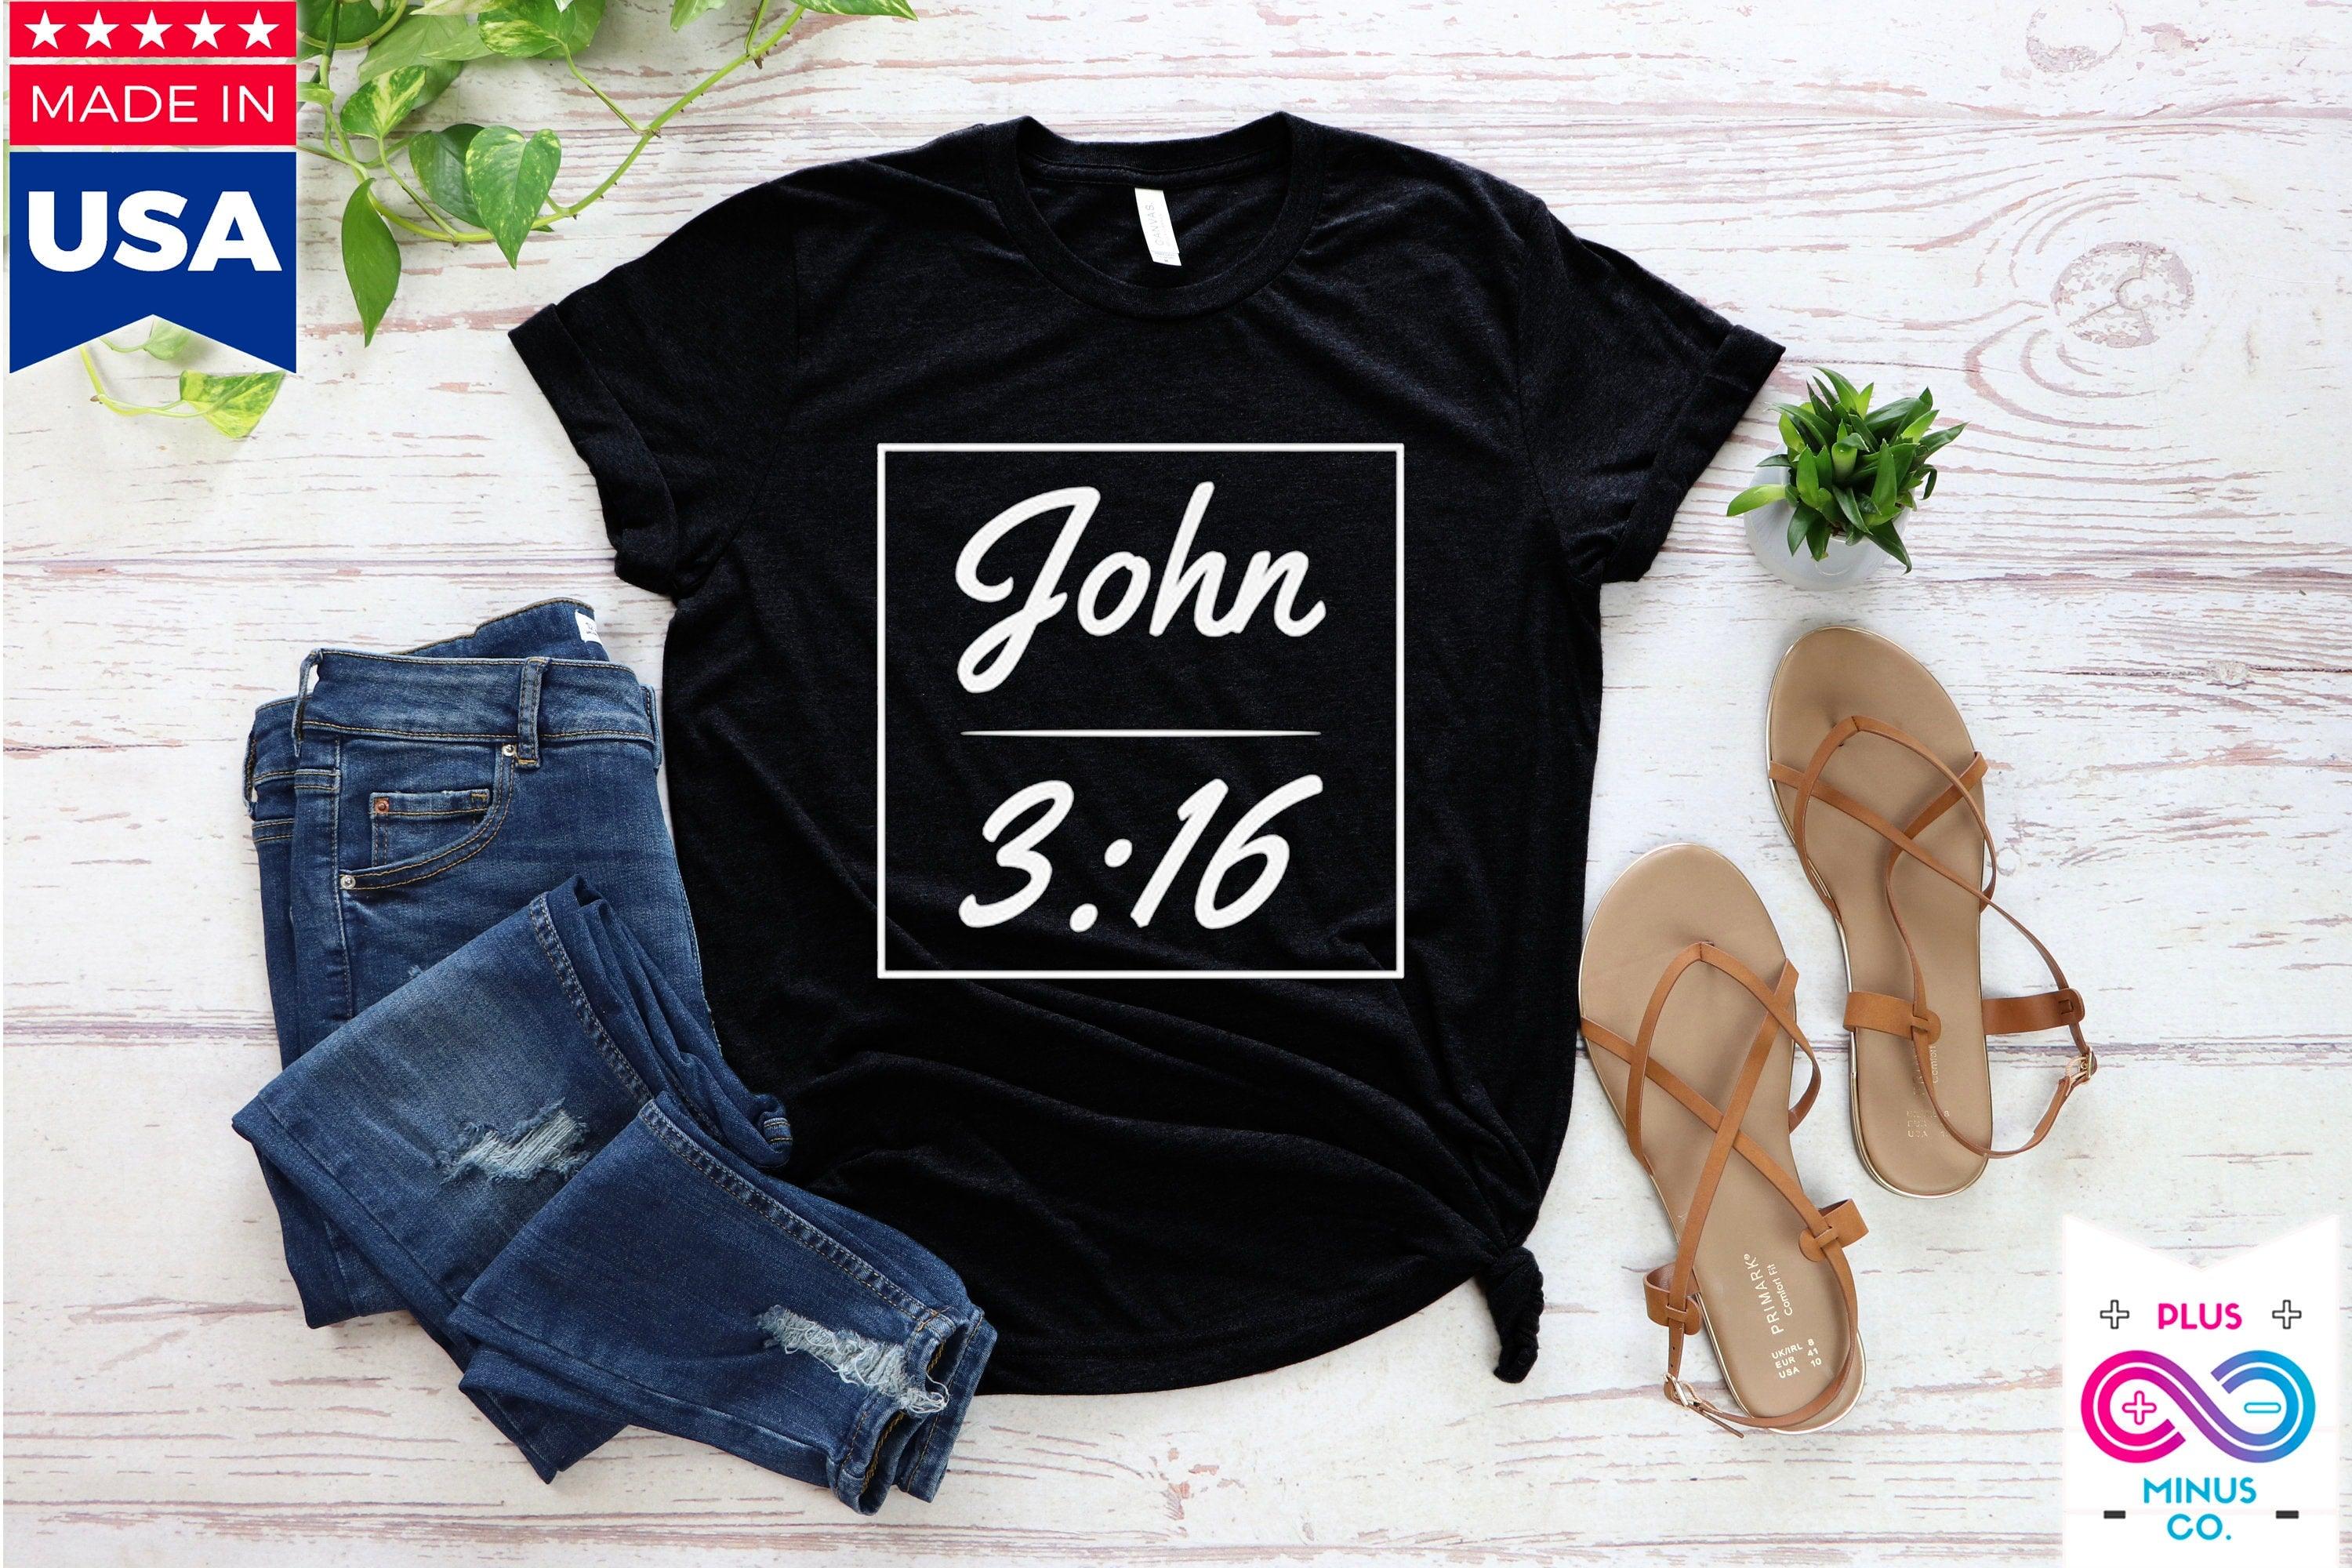 Camiseta unissex John 3:16 Softstyle, fé, camiseta cristã, presente espiritual personalizado, camiseta personalizada da igreja para amigos, camiseta religiosa - plusminusco.com